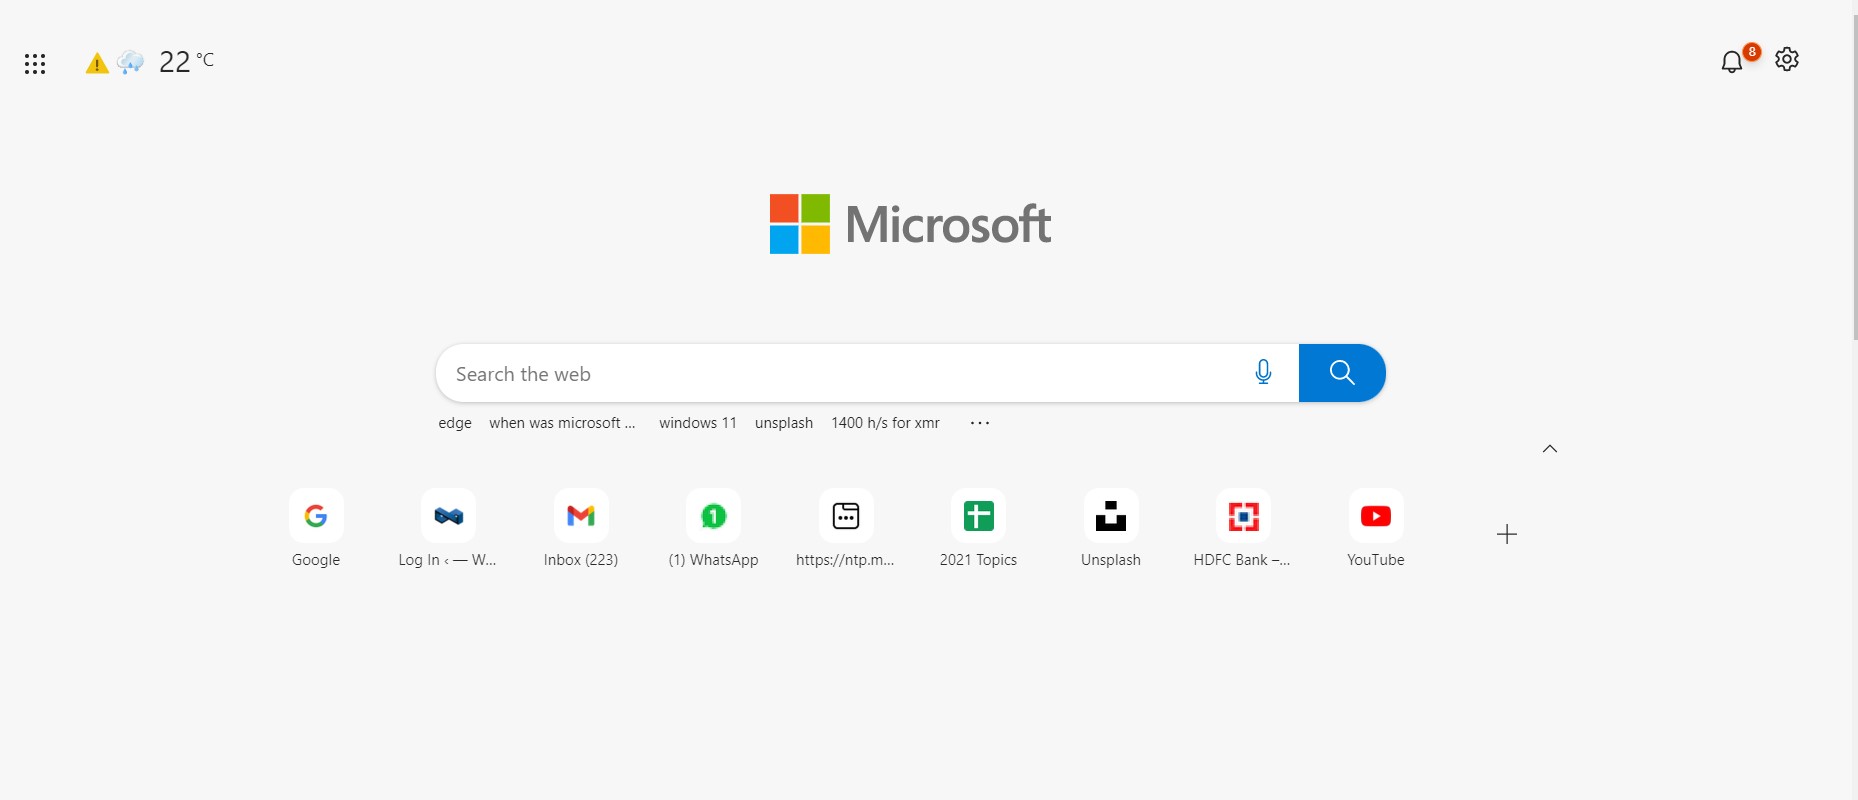 Microsoft Edge ကို ပြန်လည်ရယူရန် မြန်ဆန်လွယ်ကူသောနည်းလမ်း